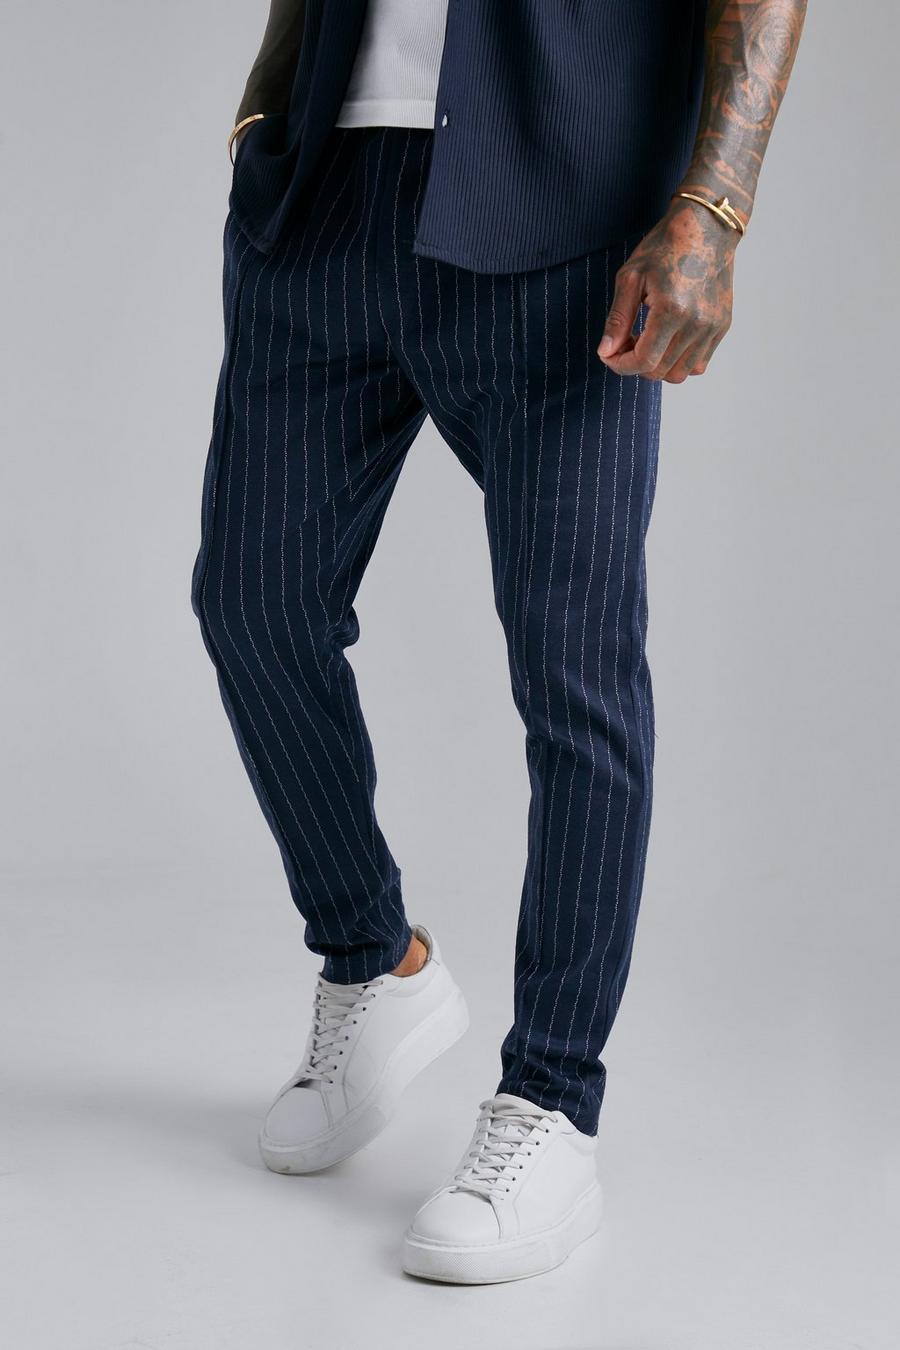 Pantaloni tuta Skinny Fit in jacquard a righe verticali con nervature, Navy blu oltremare